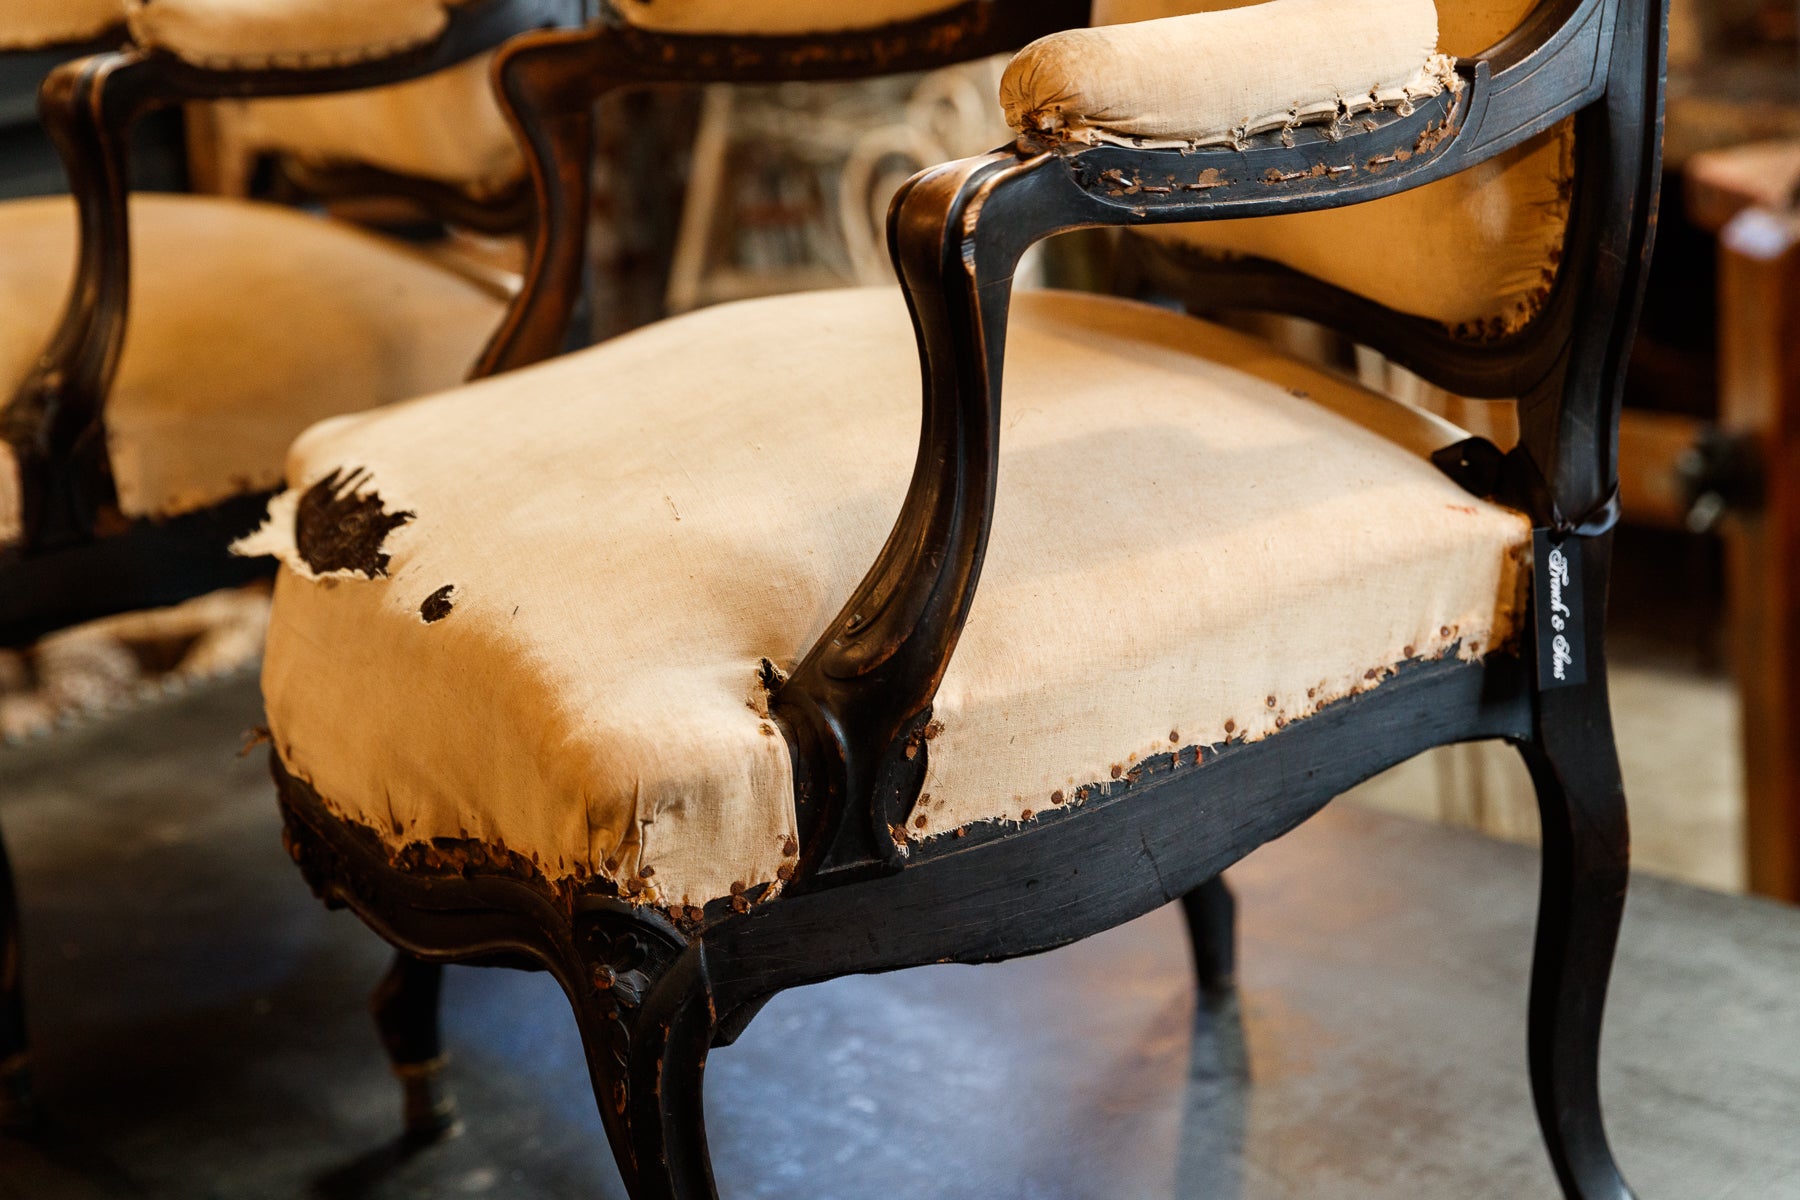 Undressed Napoleon III Parlour Chairs